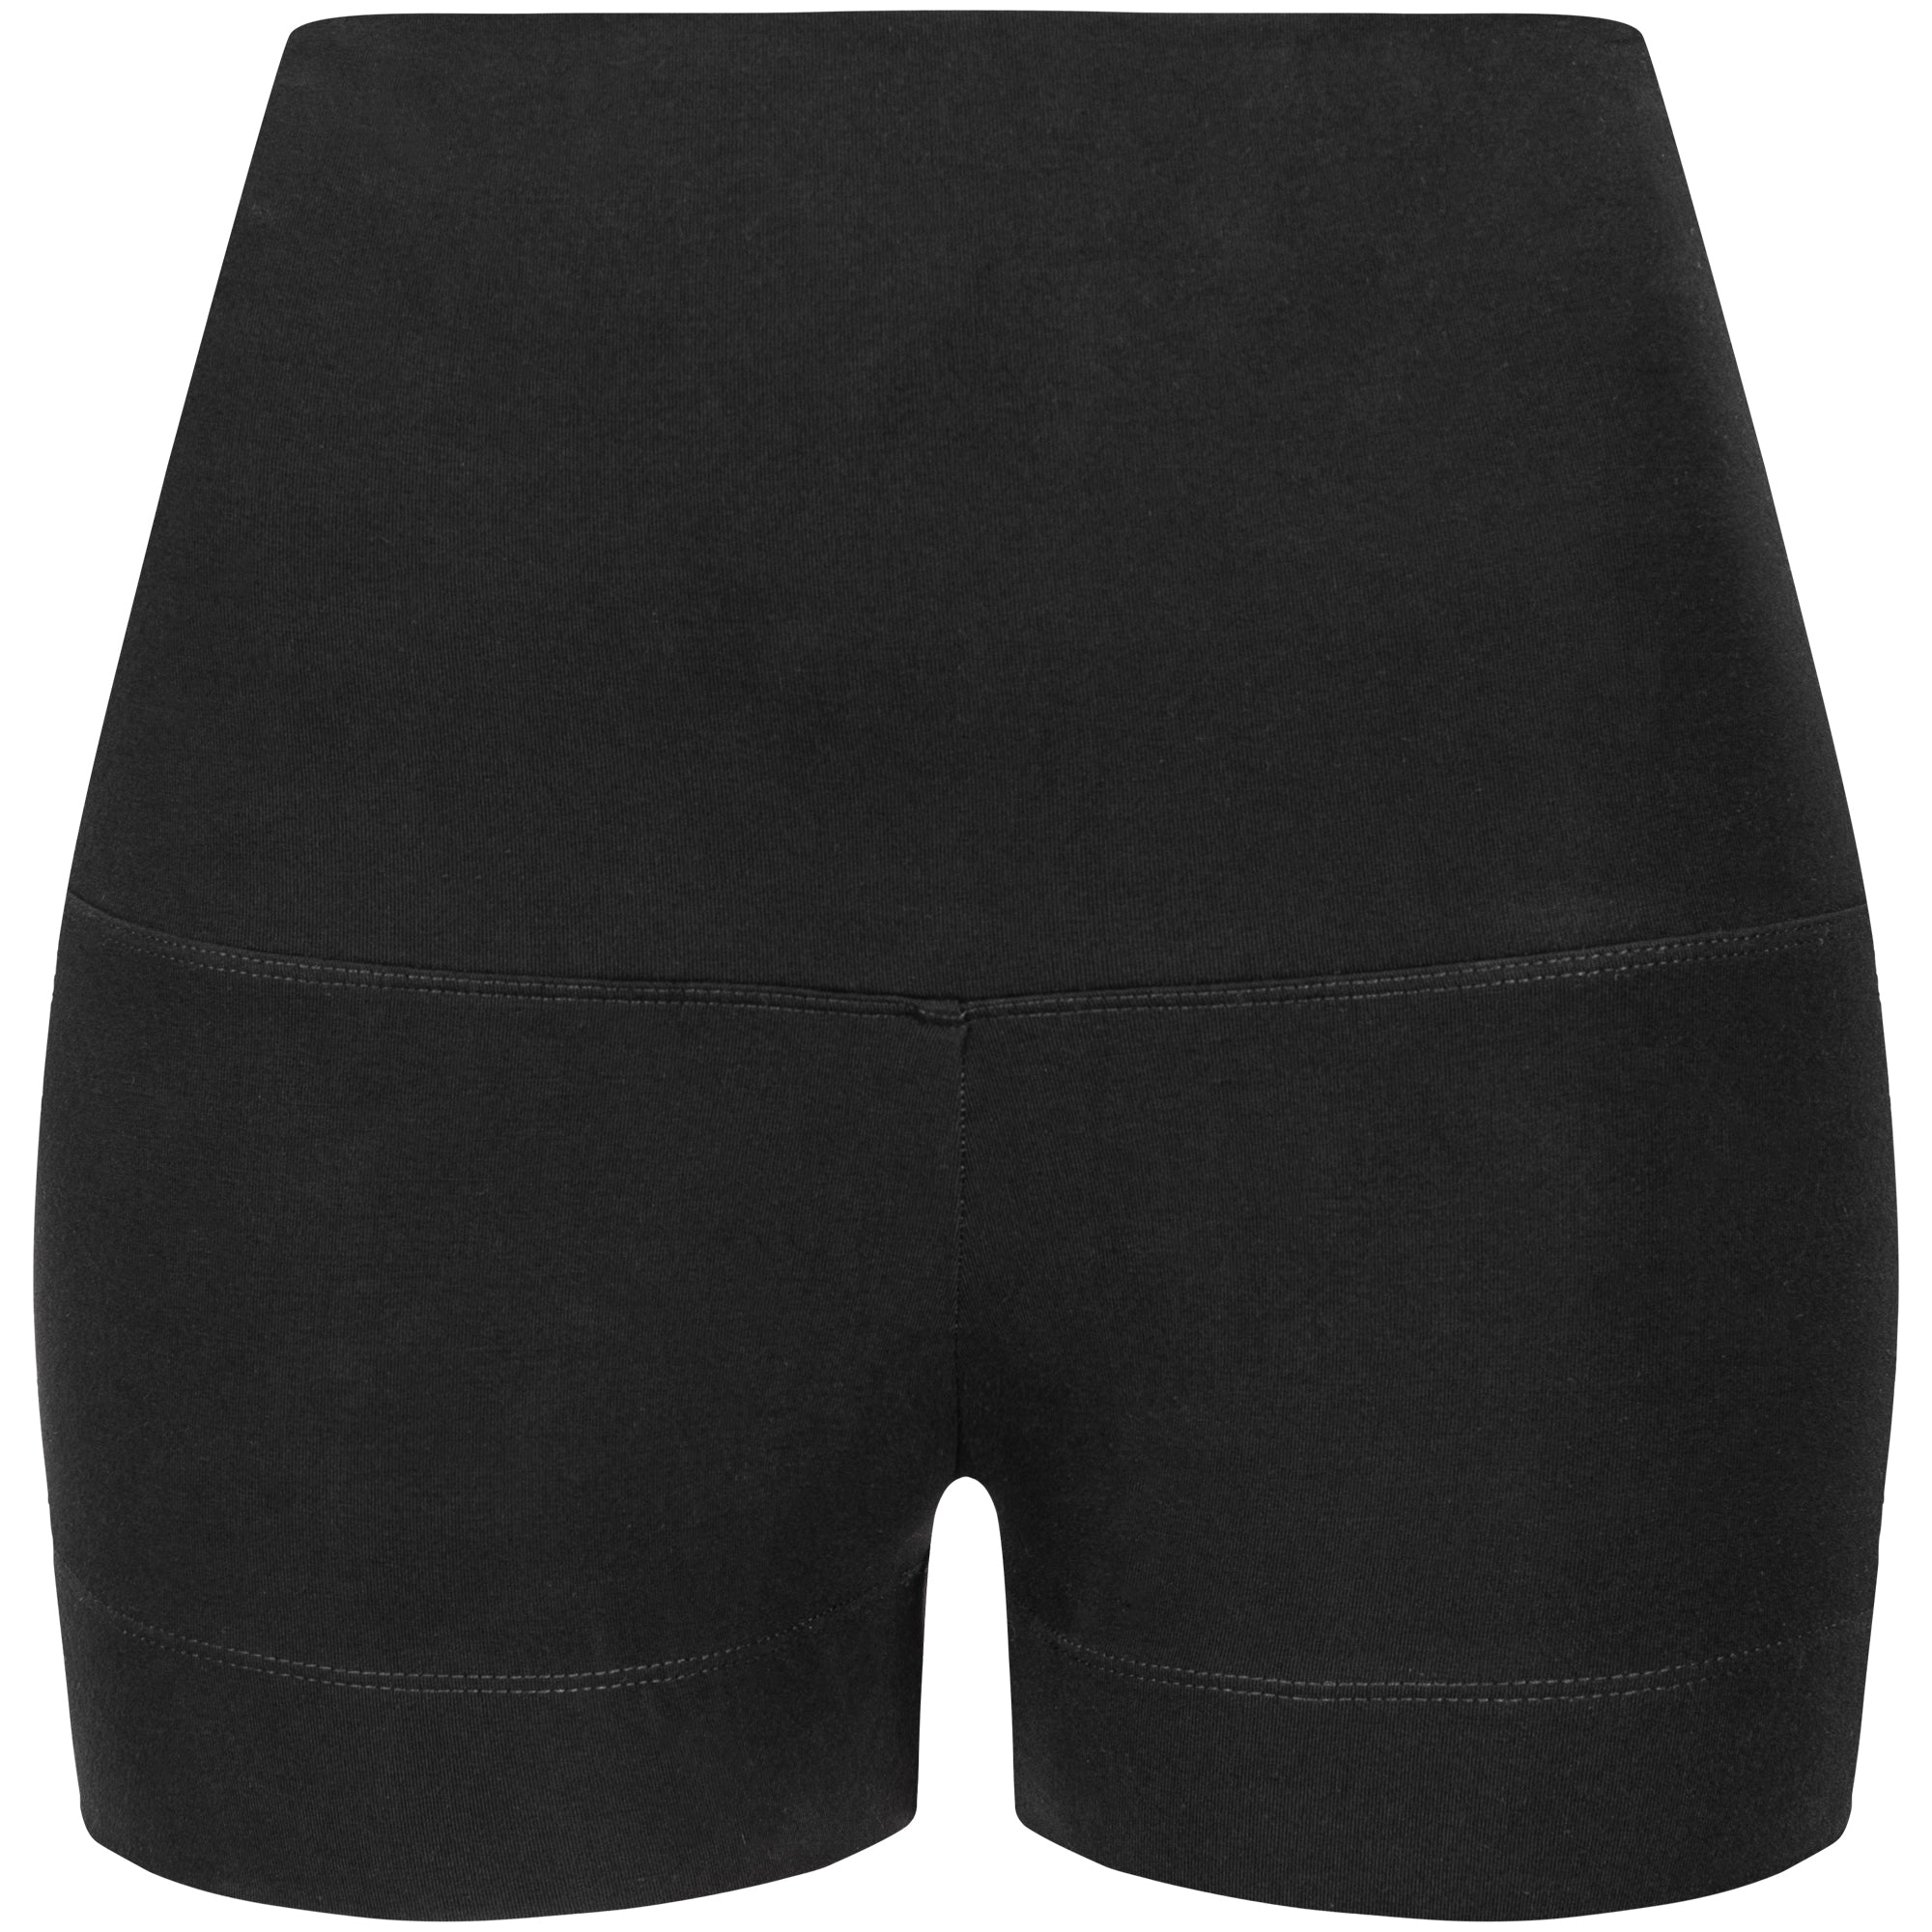 Short Pants black (thick material, runs half a size smaller)